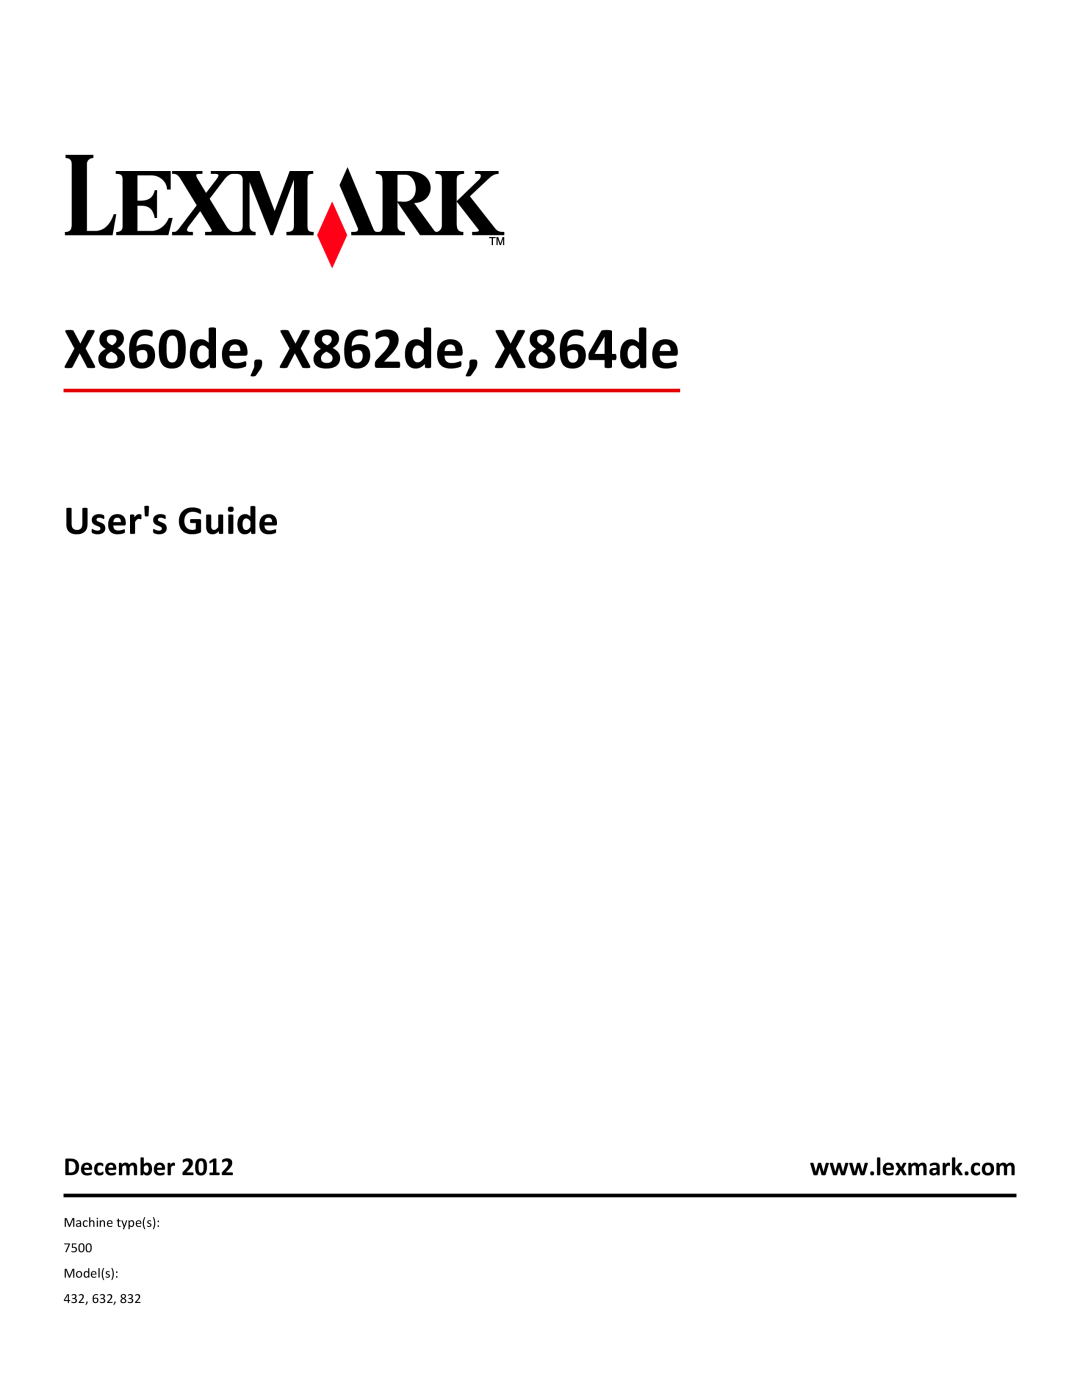 Lexmark 19Z0101, 432, 632, 832, X860DE, X862DE, X864DE, 19Z4028, 19Z0202 manual Users Guide, December, X860de, X862de, X864de 